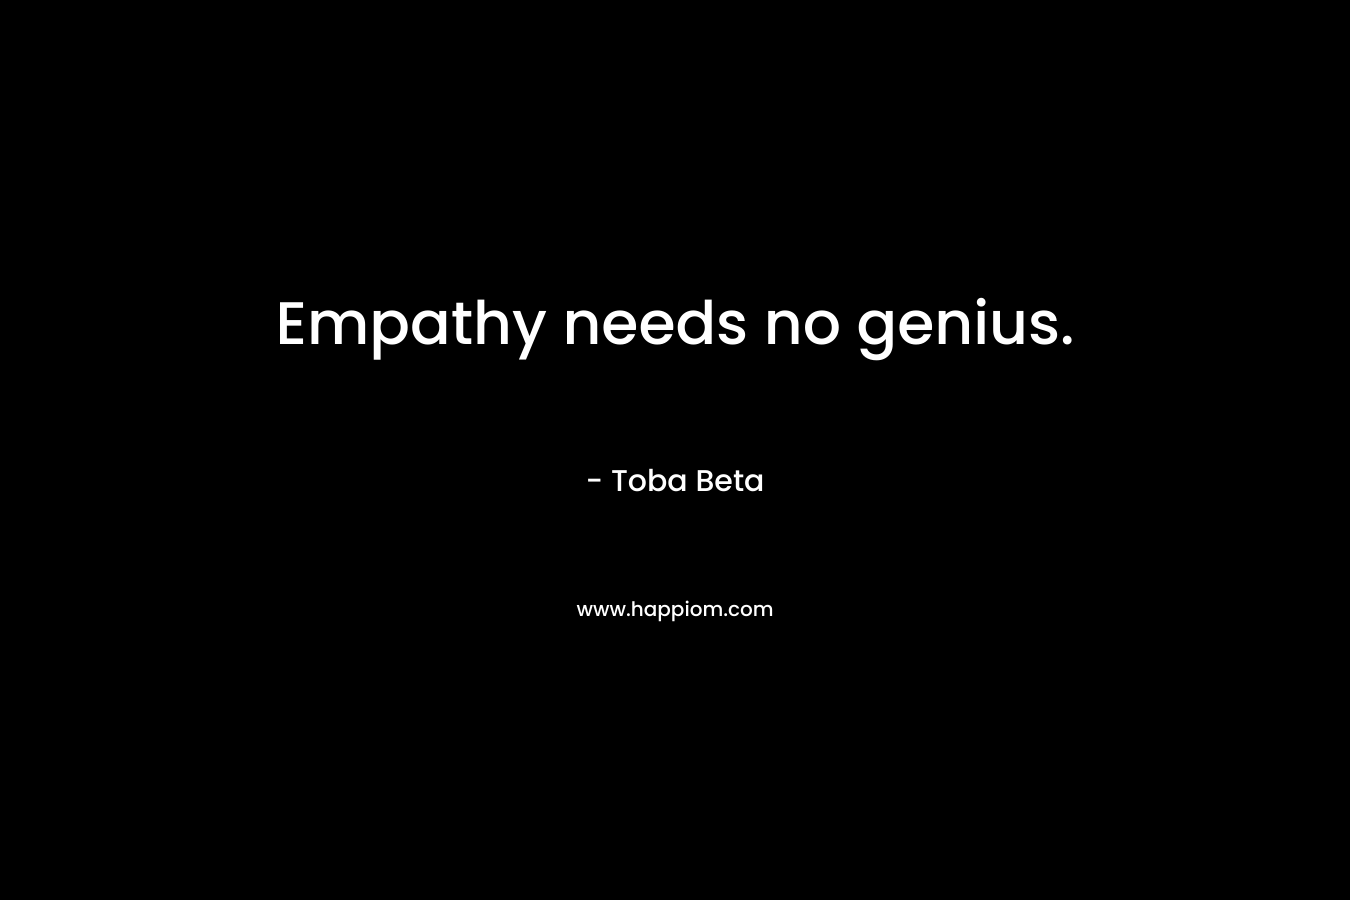 Empathy needs no genius. – Toba Beta